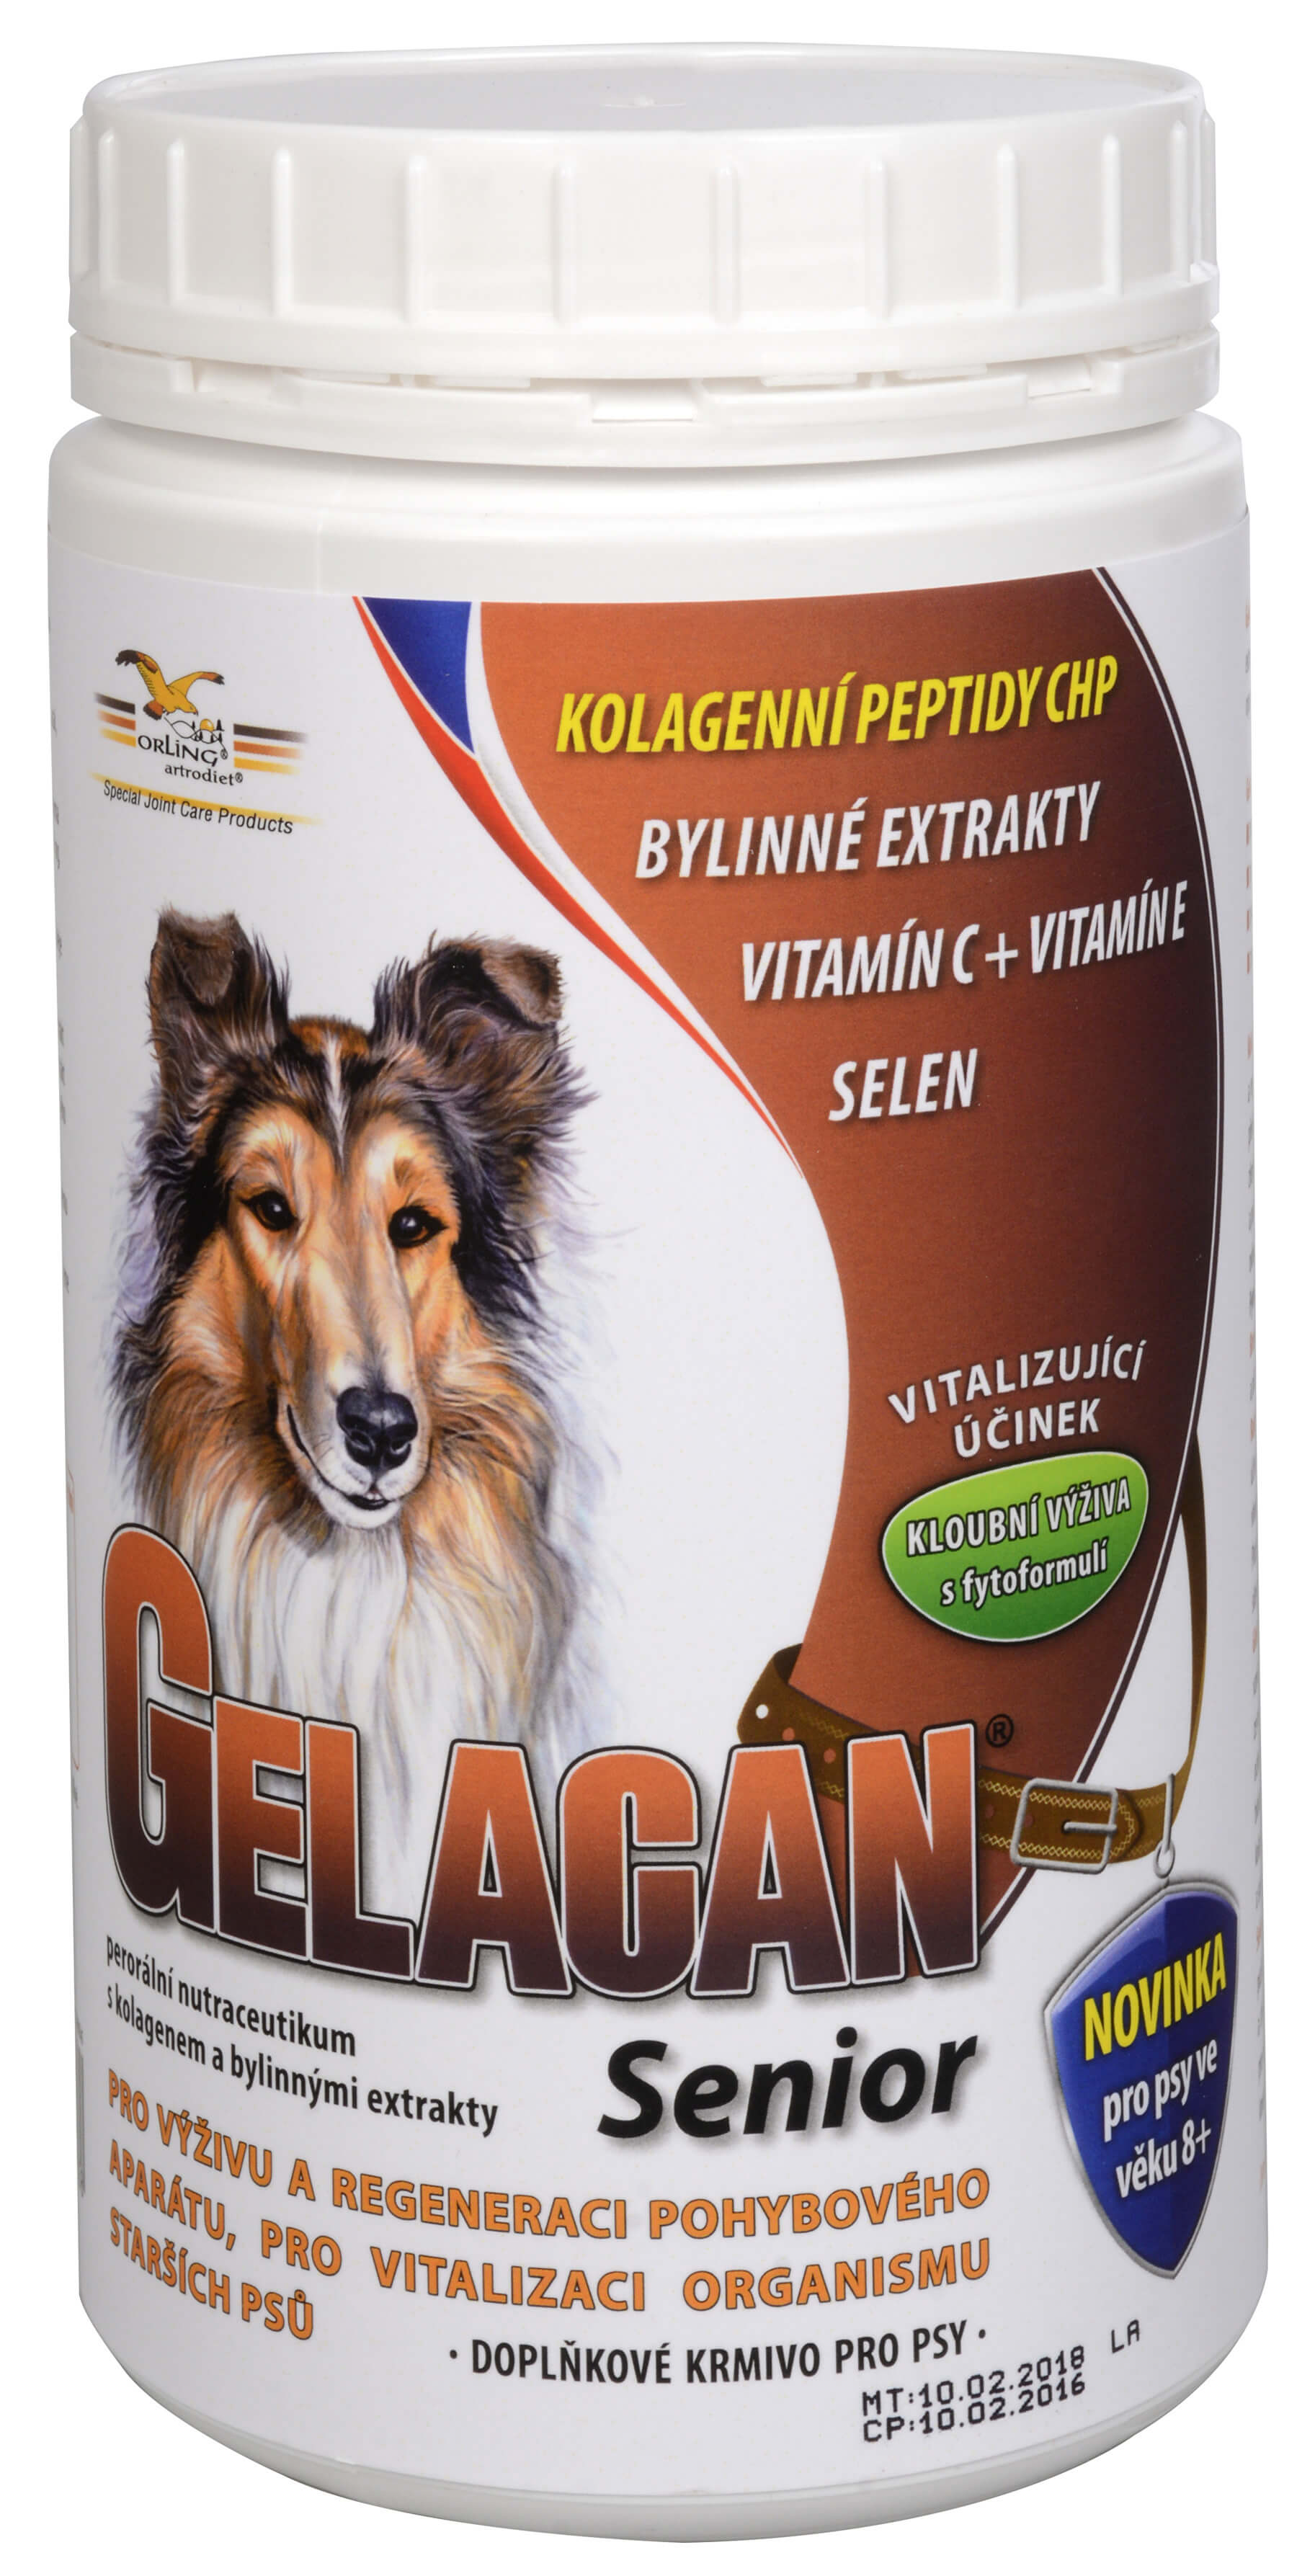 Zobrazit detail výrobku GELACAN Gelacan Senior 500 g